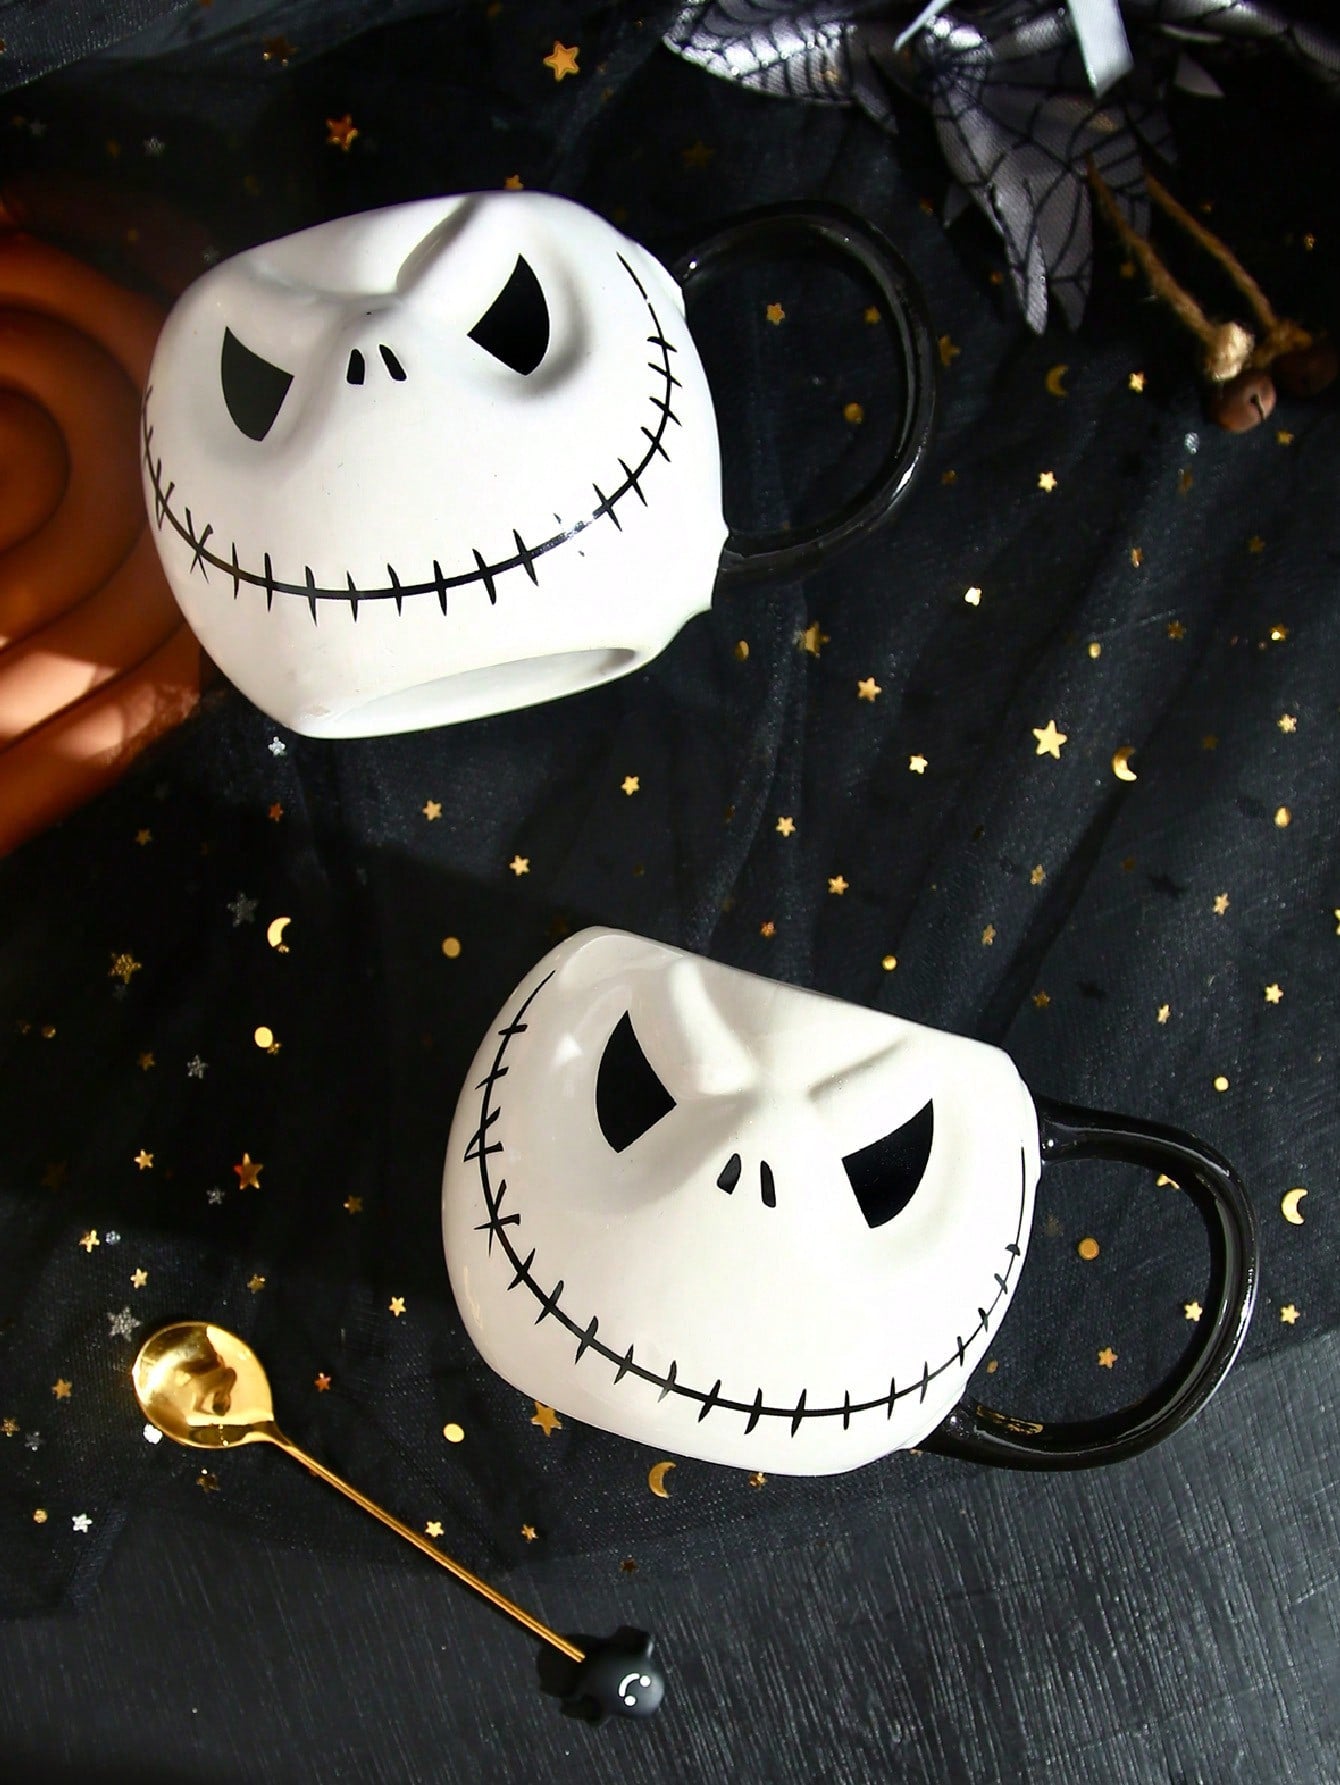 Ceramic Halloween Coffee Mug• Skull or Ghost